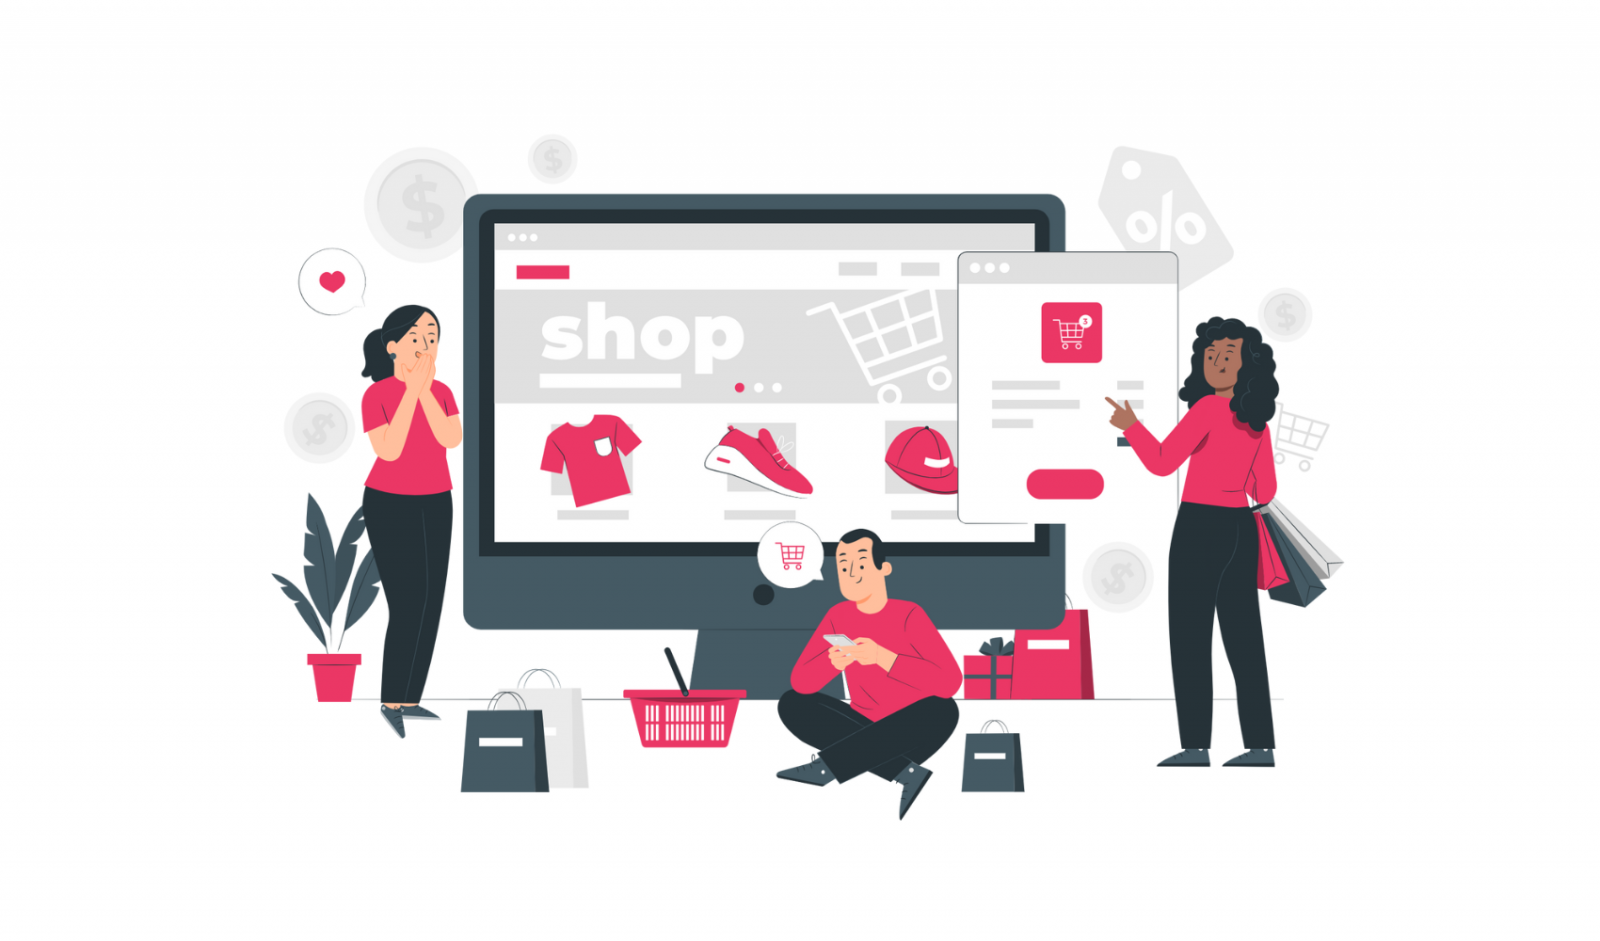 vnext global build an e-commerce website